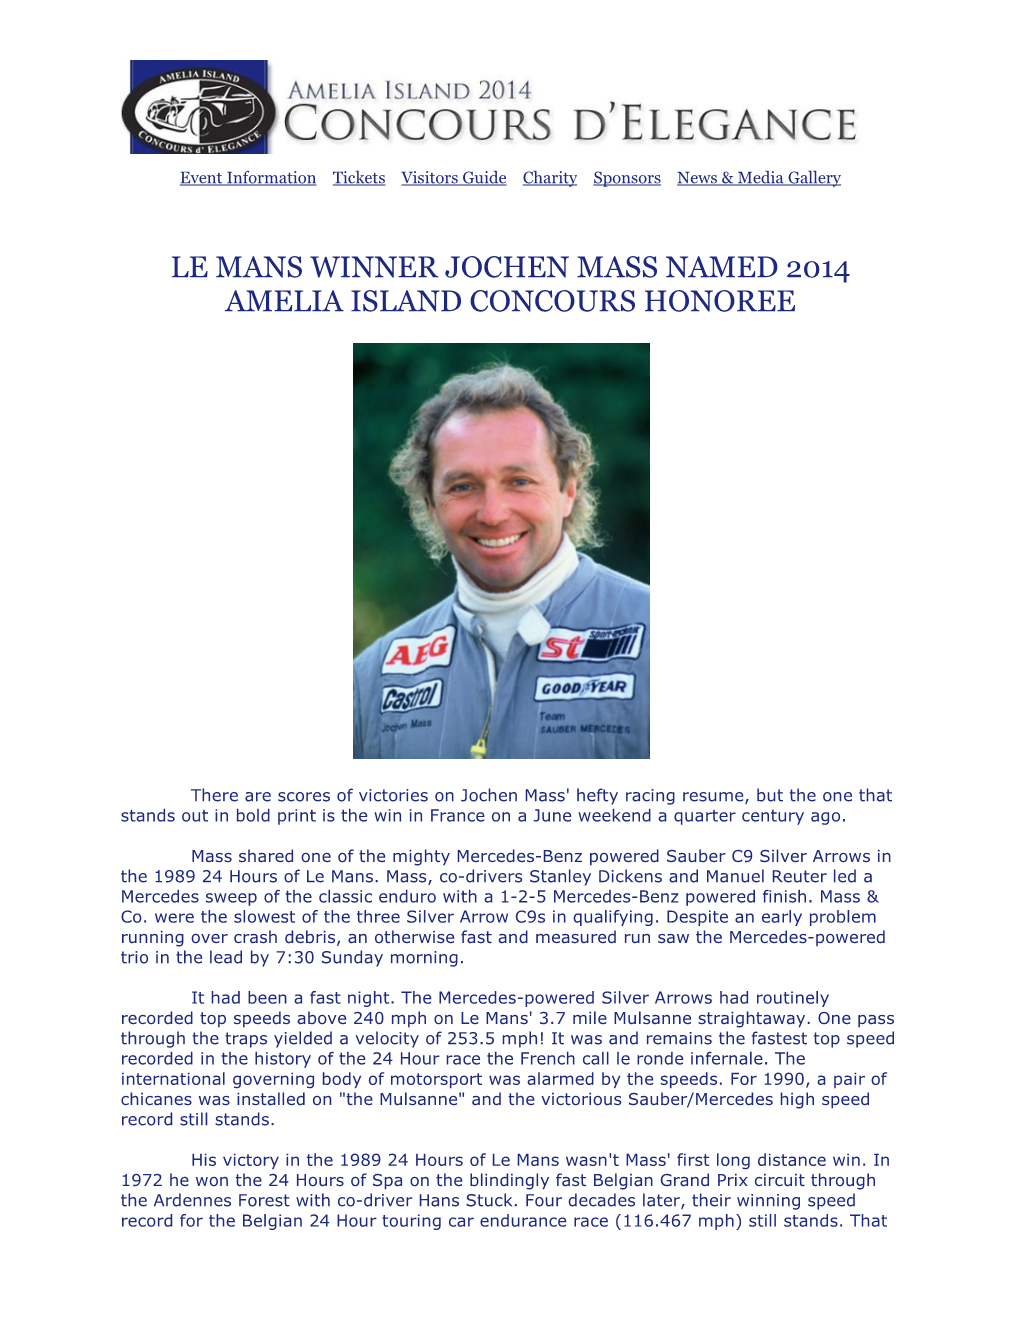 Le Mans Winner Jochen Mass Named 2014 Amelia Island Concours Honoree